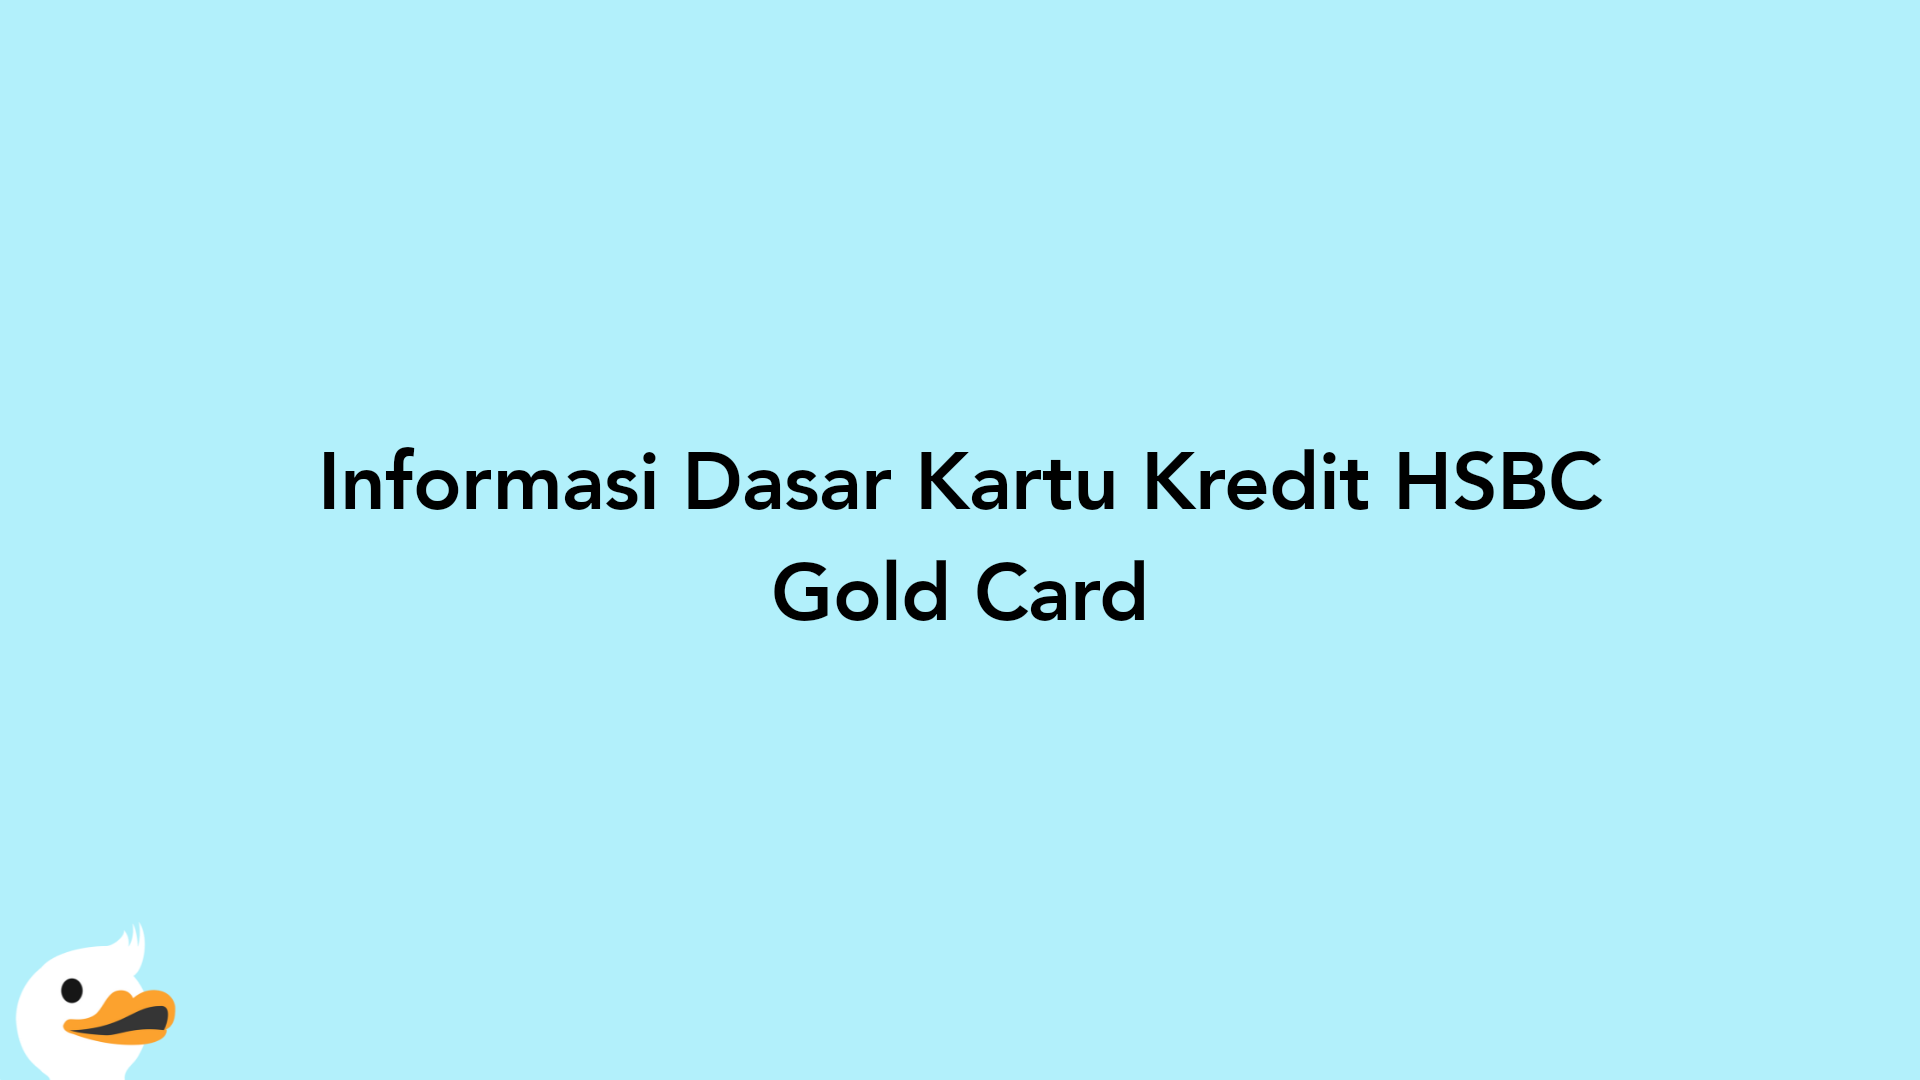 Informasi Dasar Kartu Kredit HSBC Gold Card